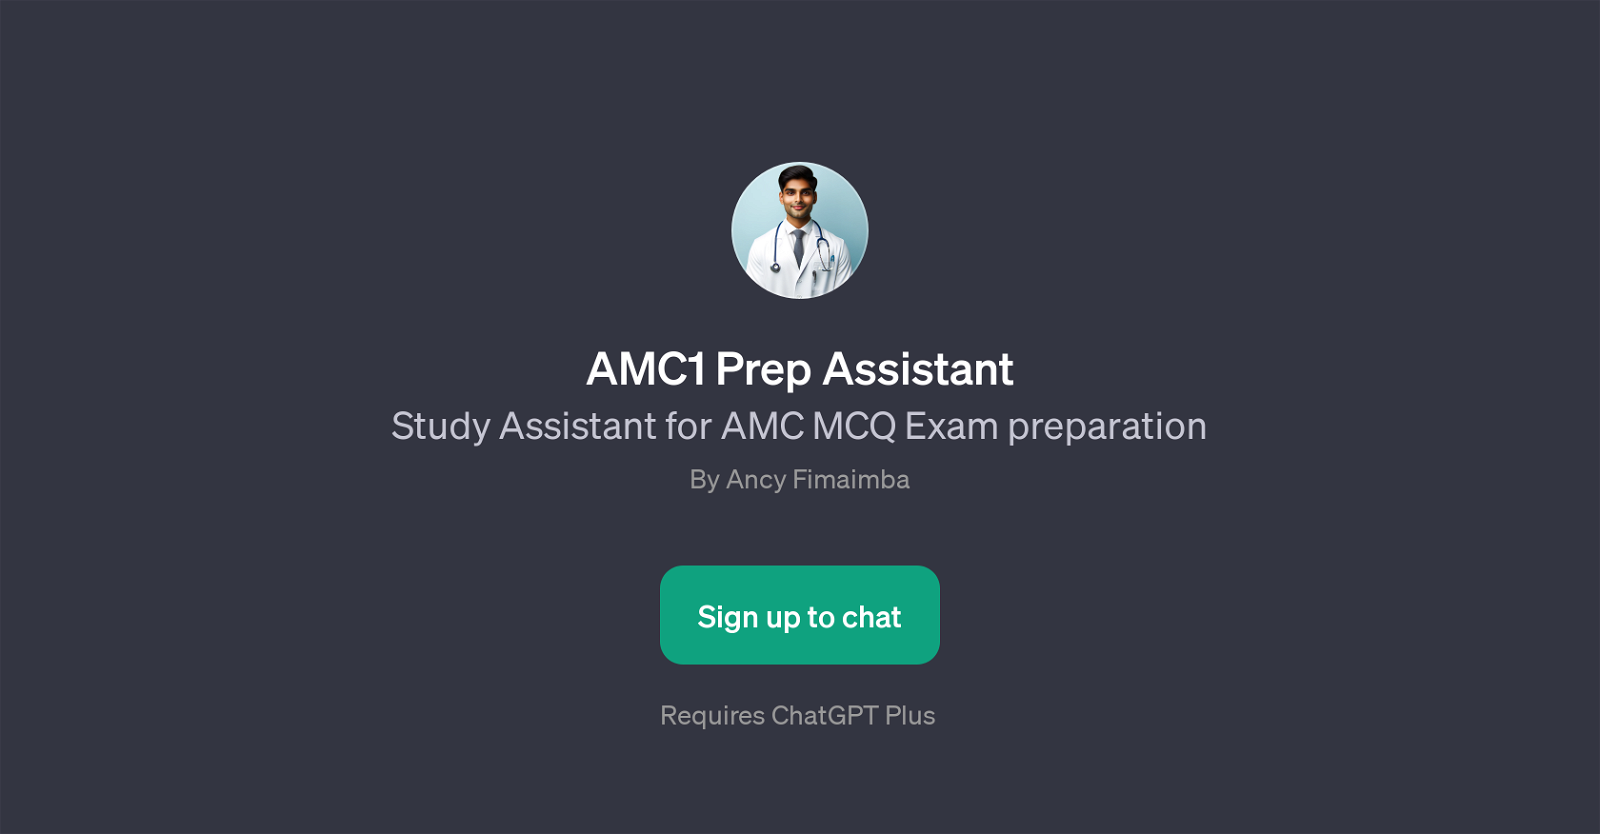 AMC1 Prep Assistant website